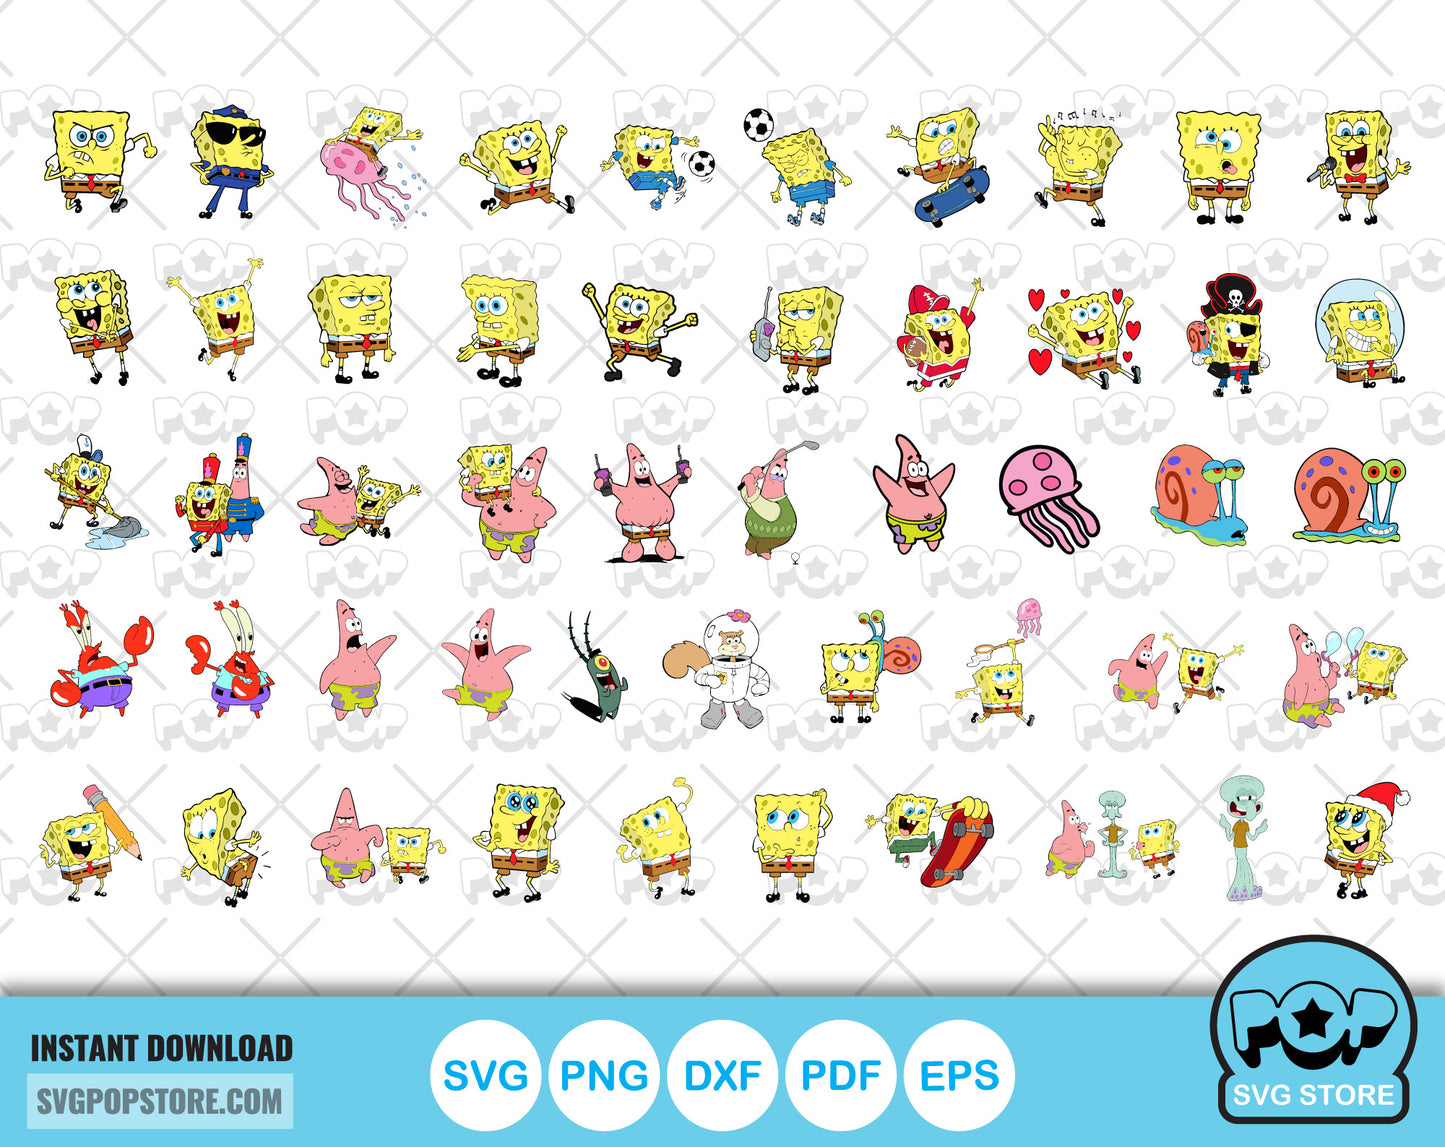 Spongebob Squarepants 100 cliparts bundle, SpongeBob svg cut files for Cricut / Silhouette, Spongebob png